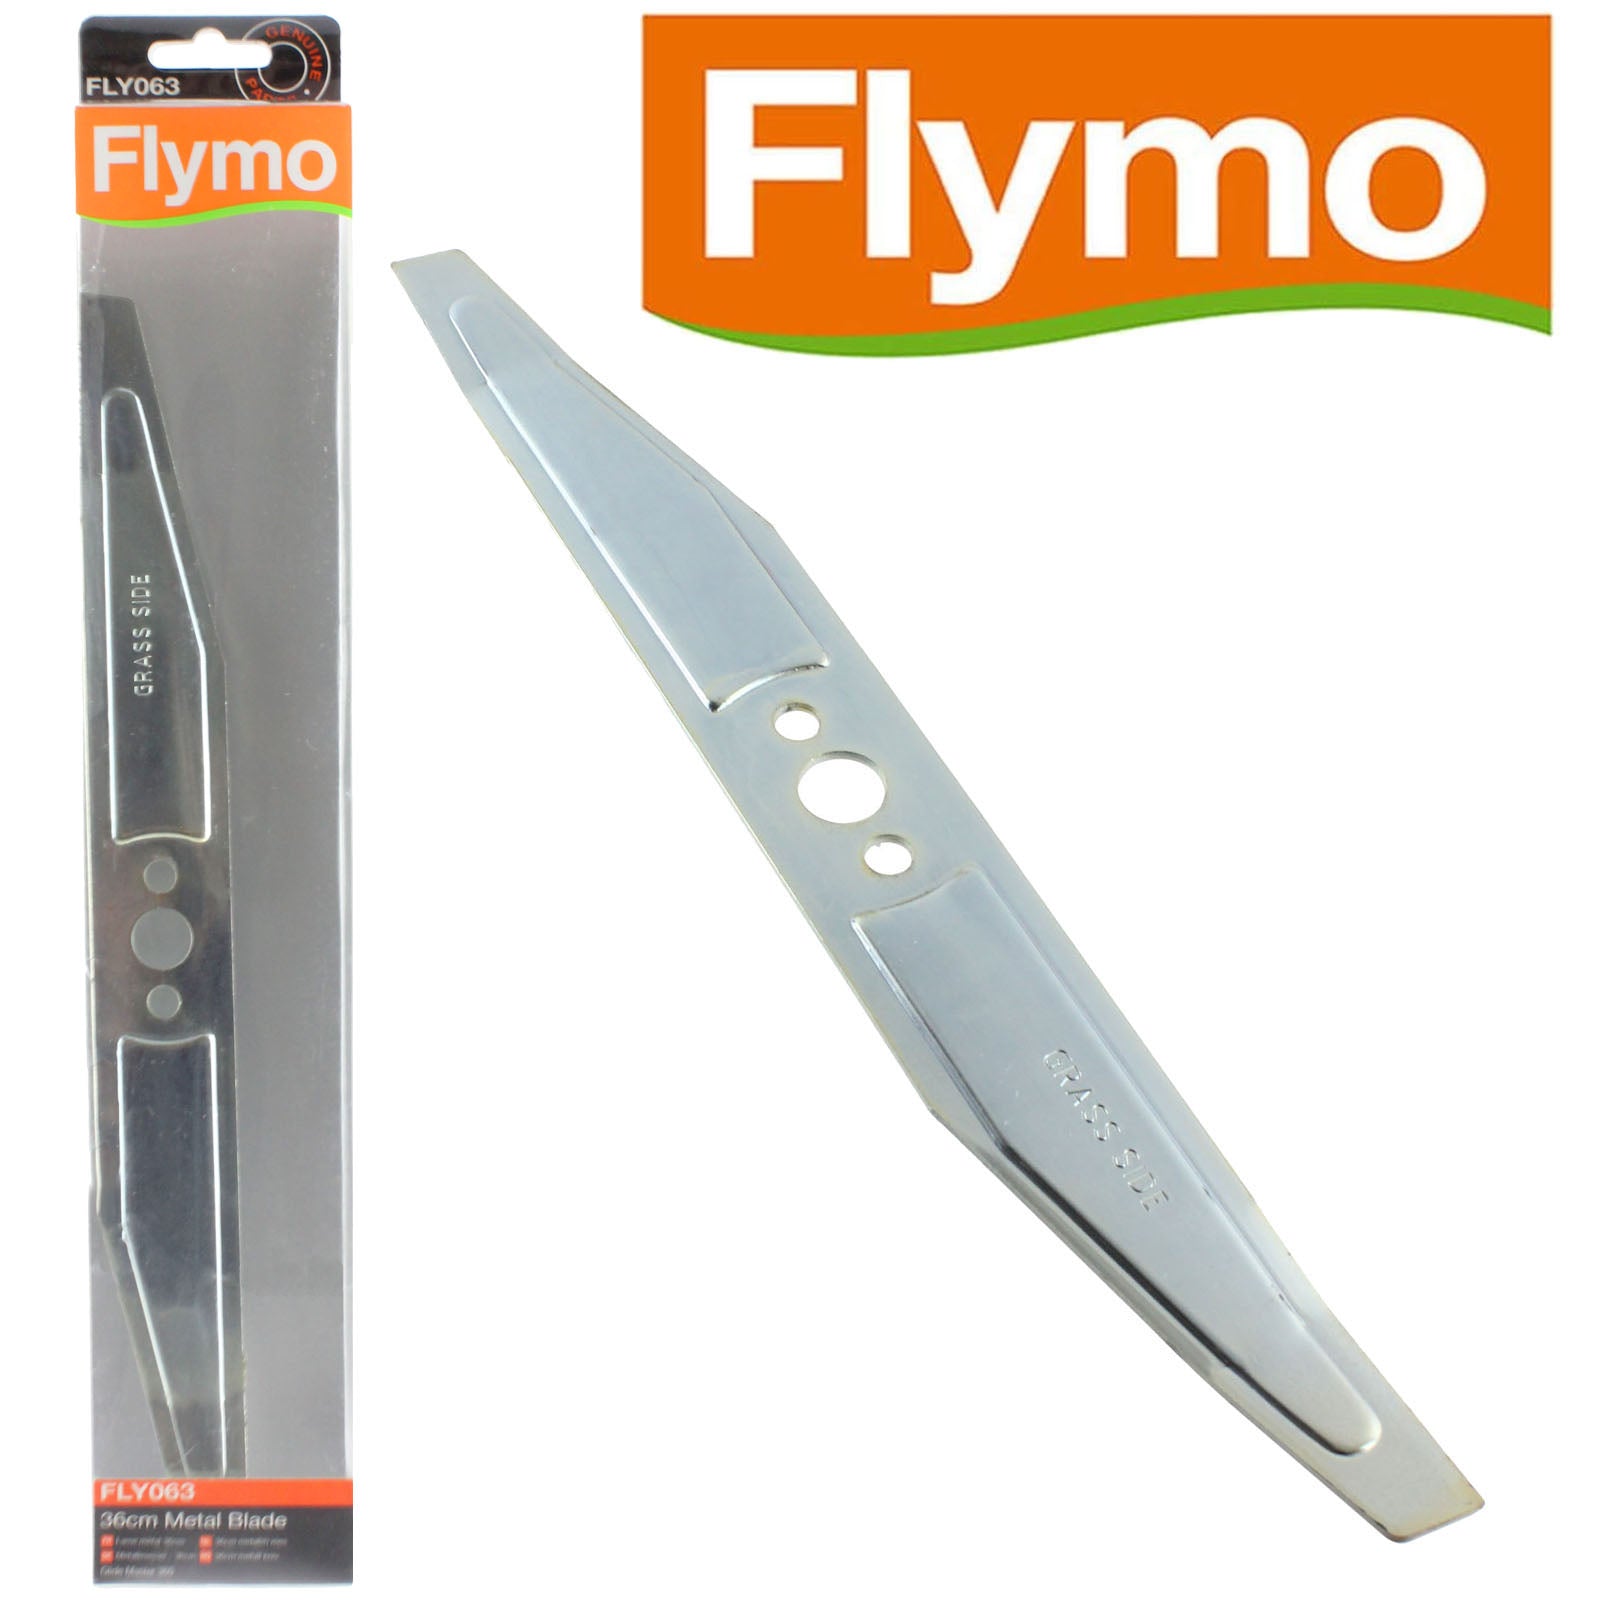 FLYMO Lawnmower Blade 36cm Glide Master 360 FLY063 Genuine Metal Cutter Part